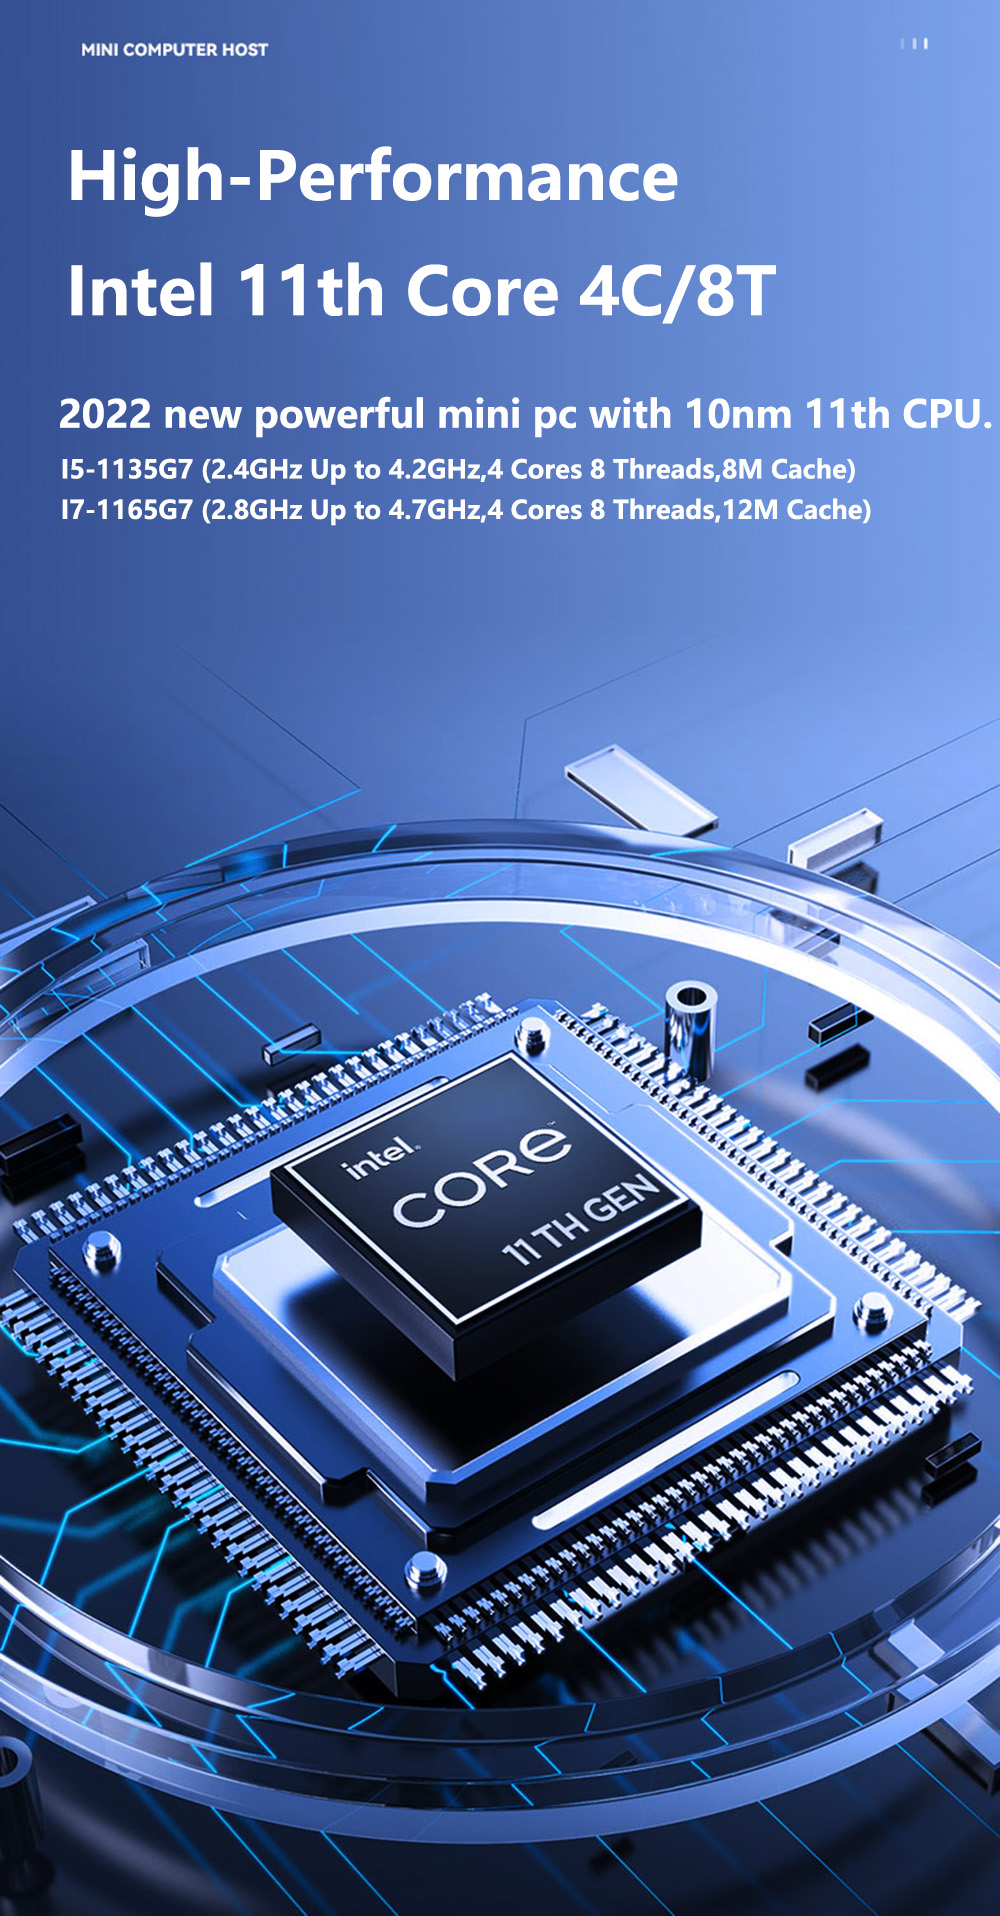 Fanless-Version-NVISEN-FU01-Intel-I3-1115G4-Intel-lris-Xe-Graphics-Mini-PC-8GB-DDR4-RAM-256GB-SSD-Wi-1950754-4